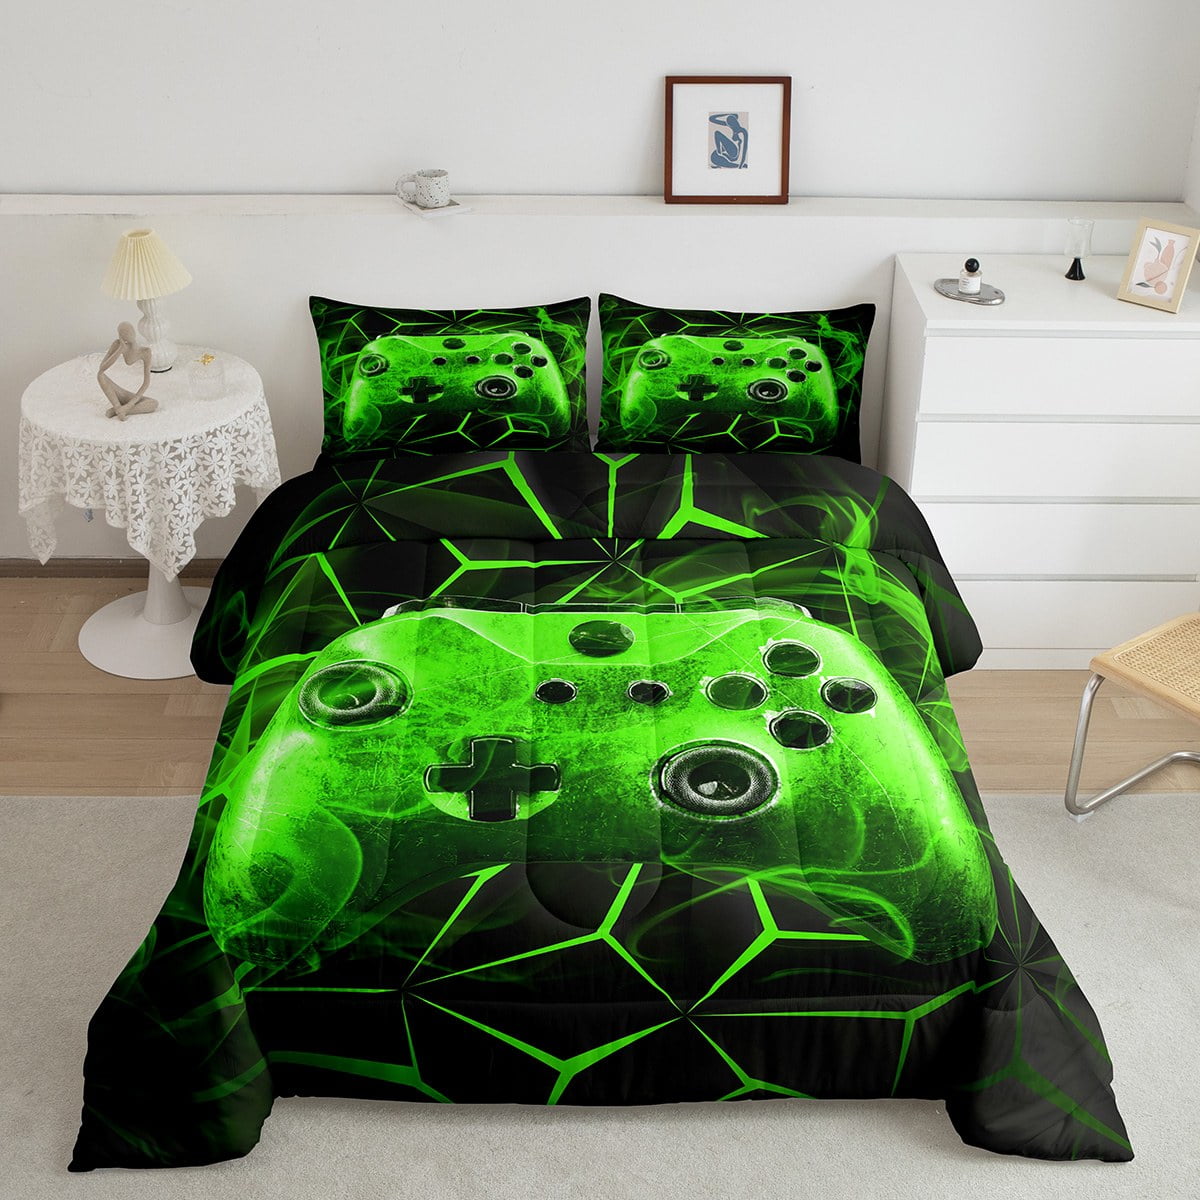 YST Gaming Comforter Set Kids Gamer Video Games Comforter for Boys ...